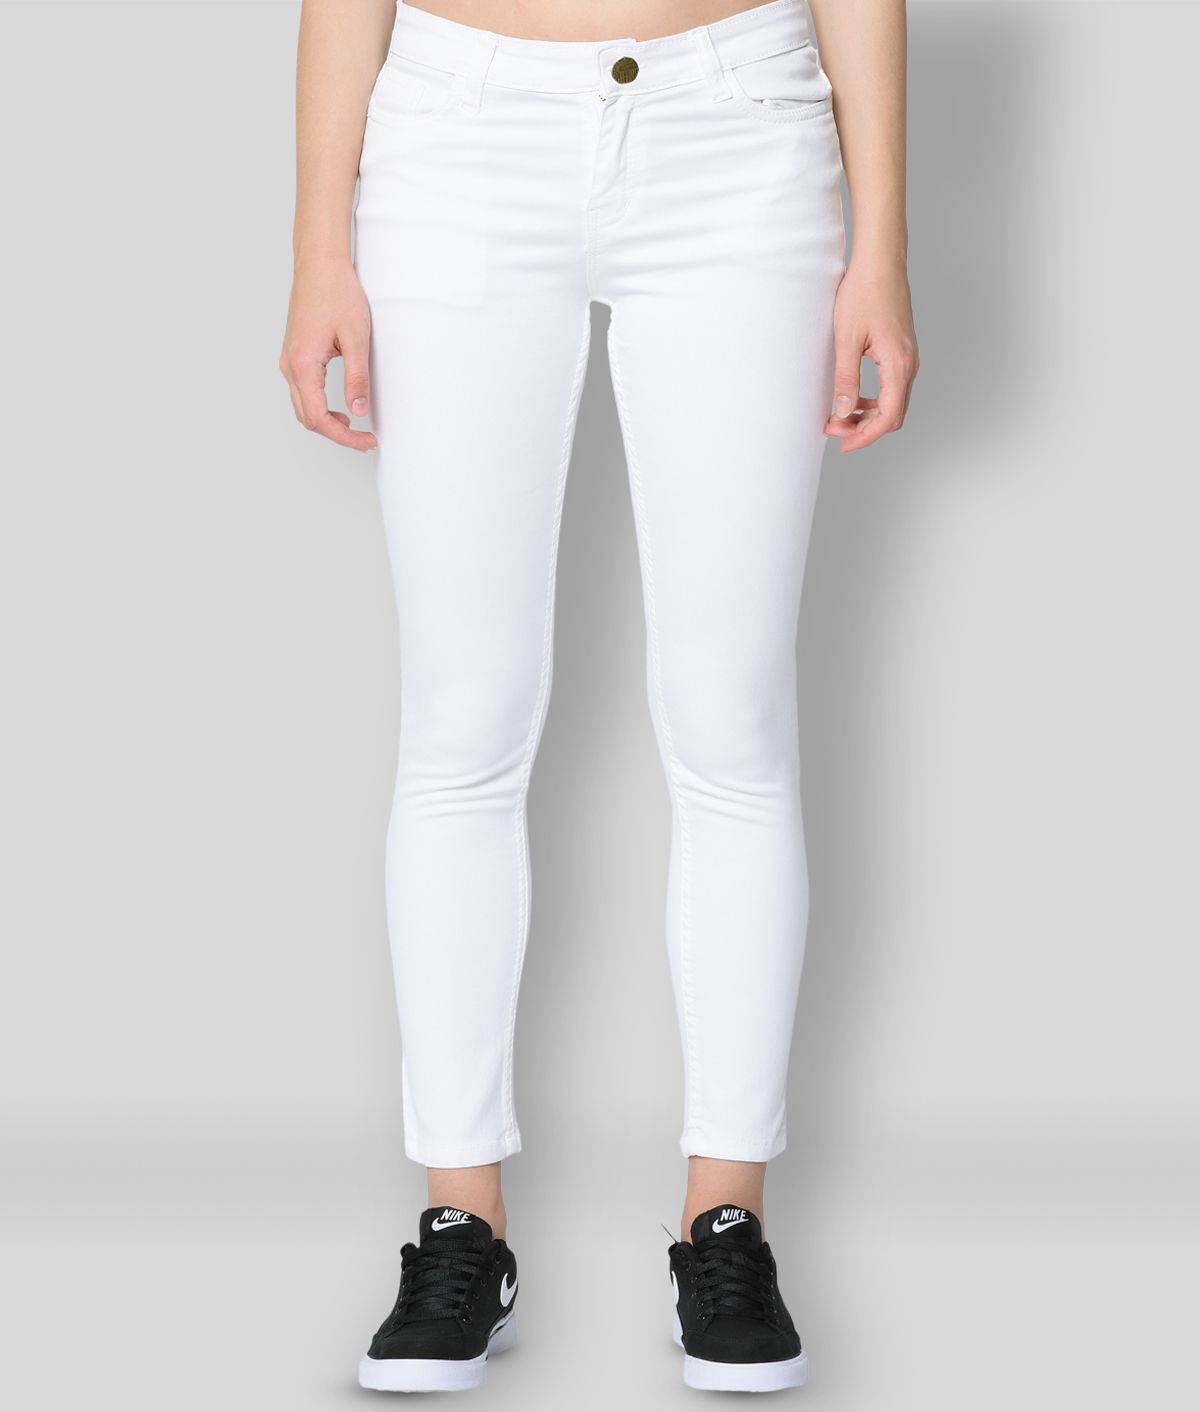 Studio Nexx - White Cotton Lycra Women's Jeans ( Pack of 1 )